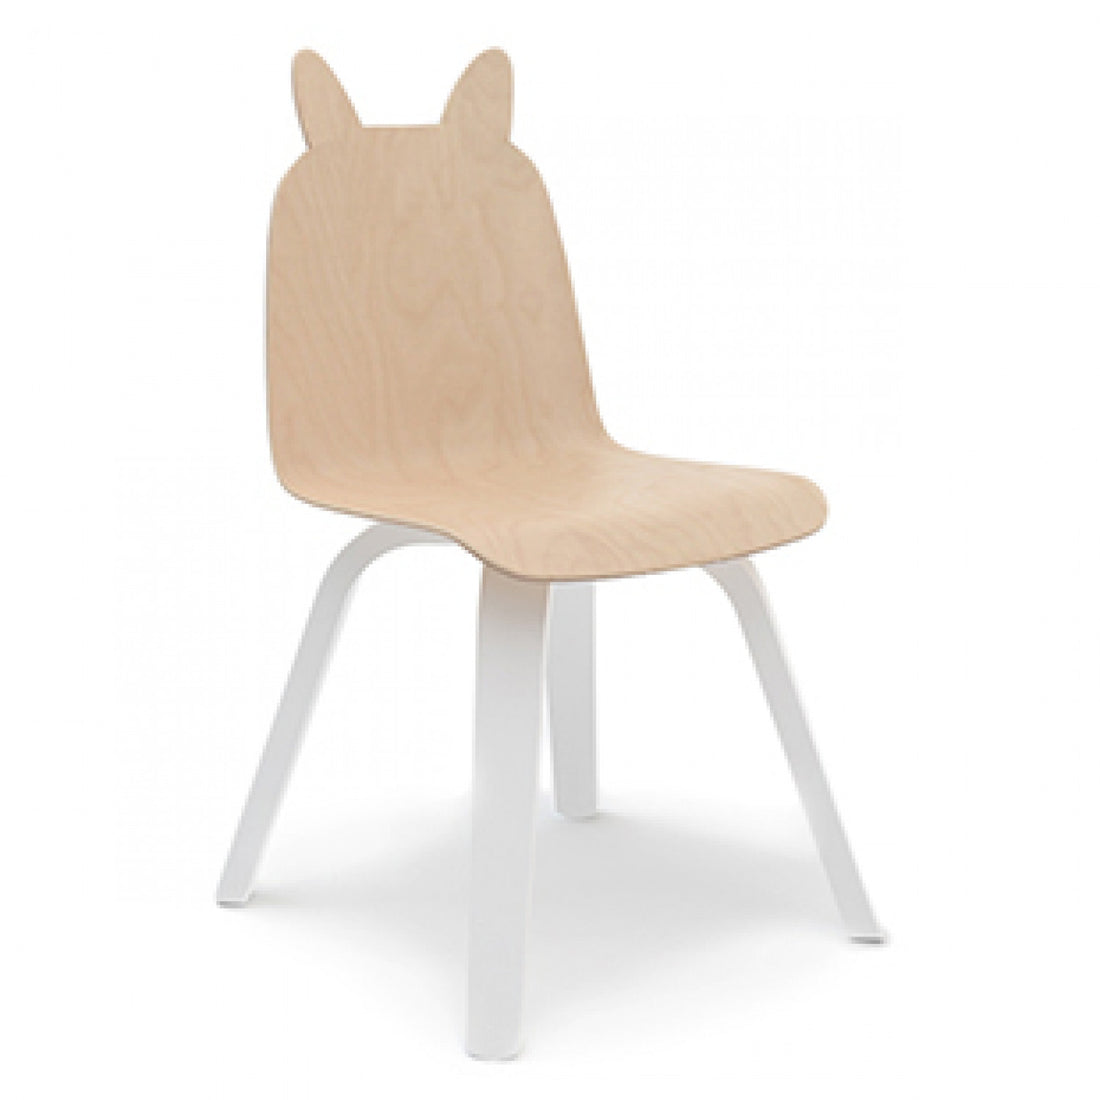 oeuf-play-chair-rabbit-furniture-oeuf-1pycr01-01